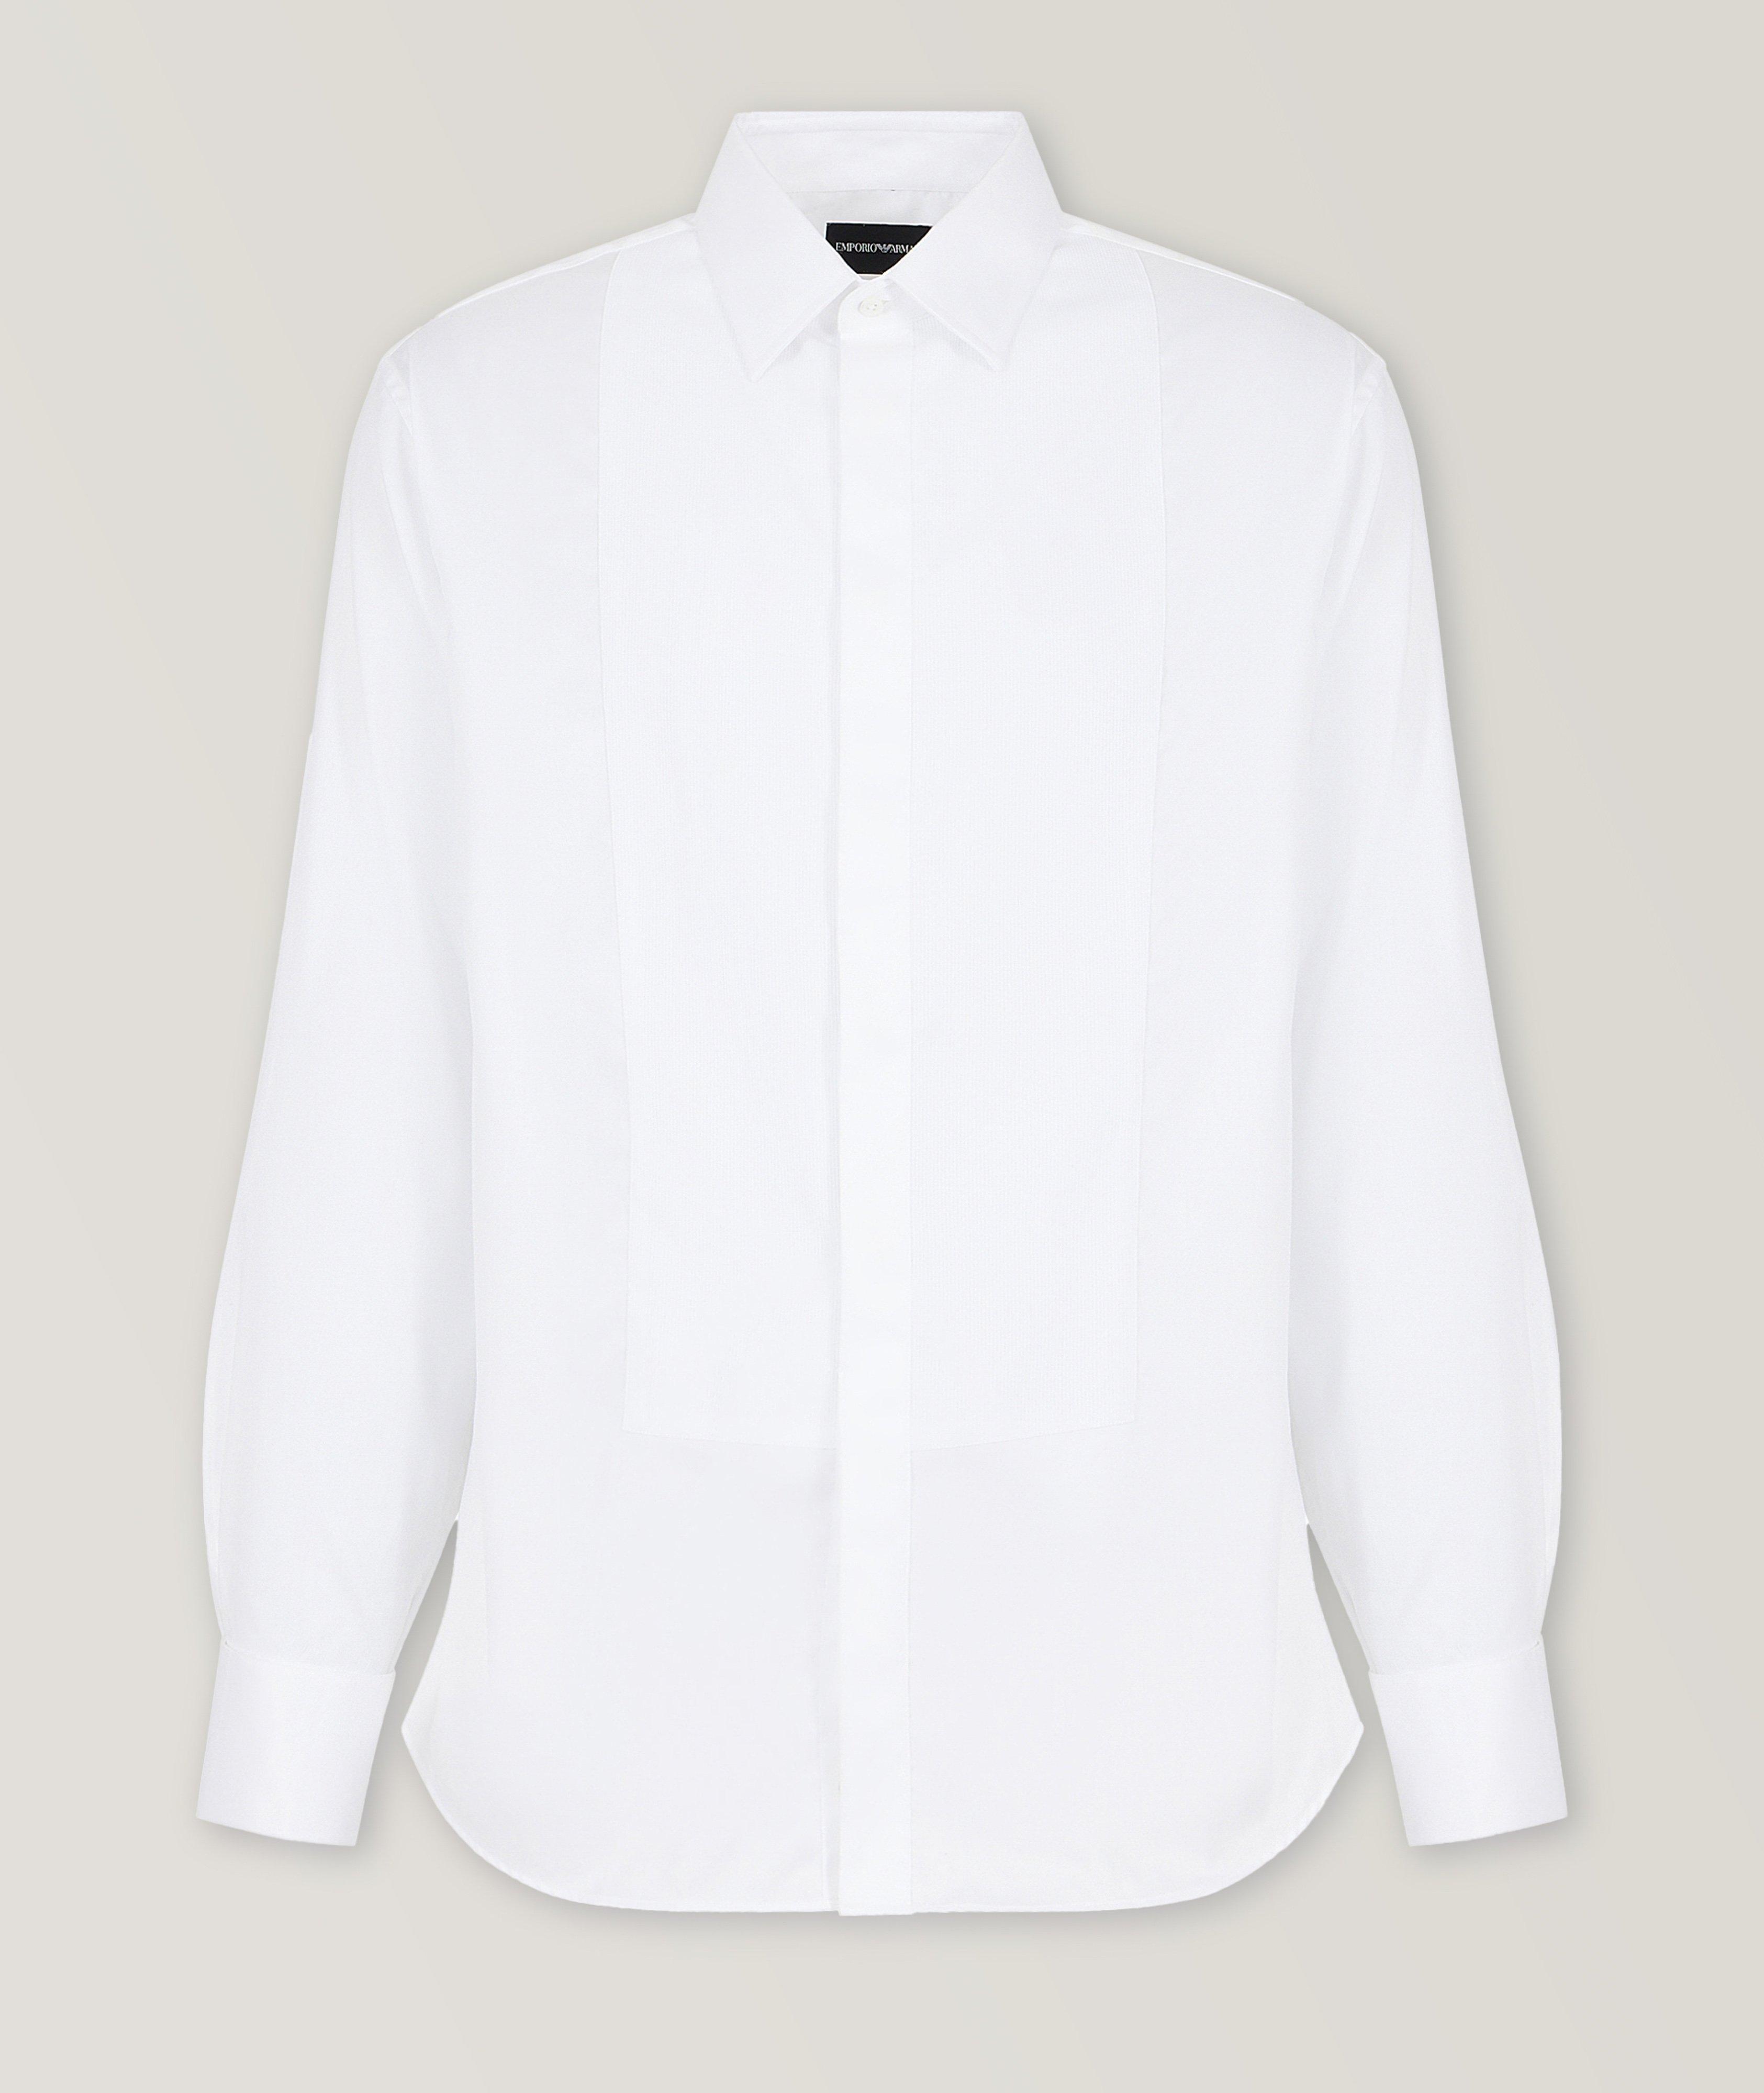 Cotton Tuxedo Shirt image 0